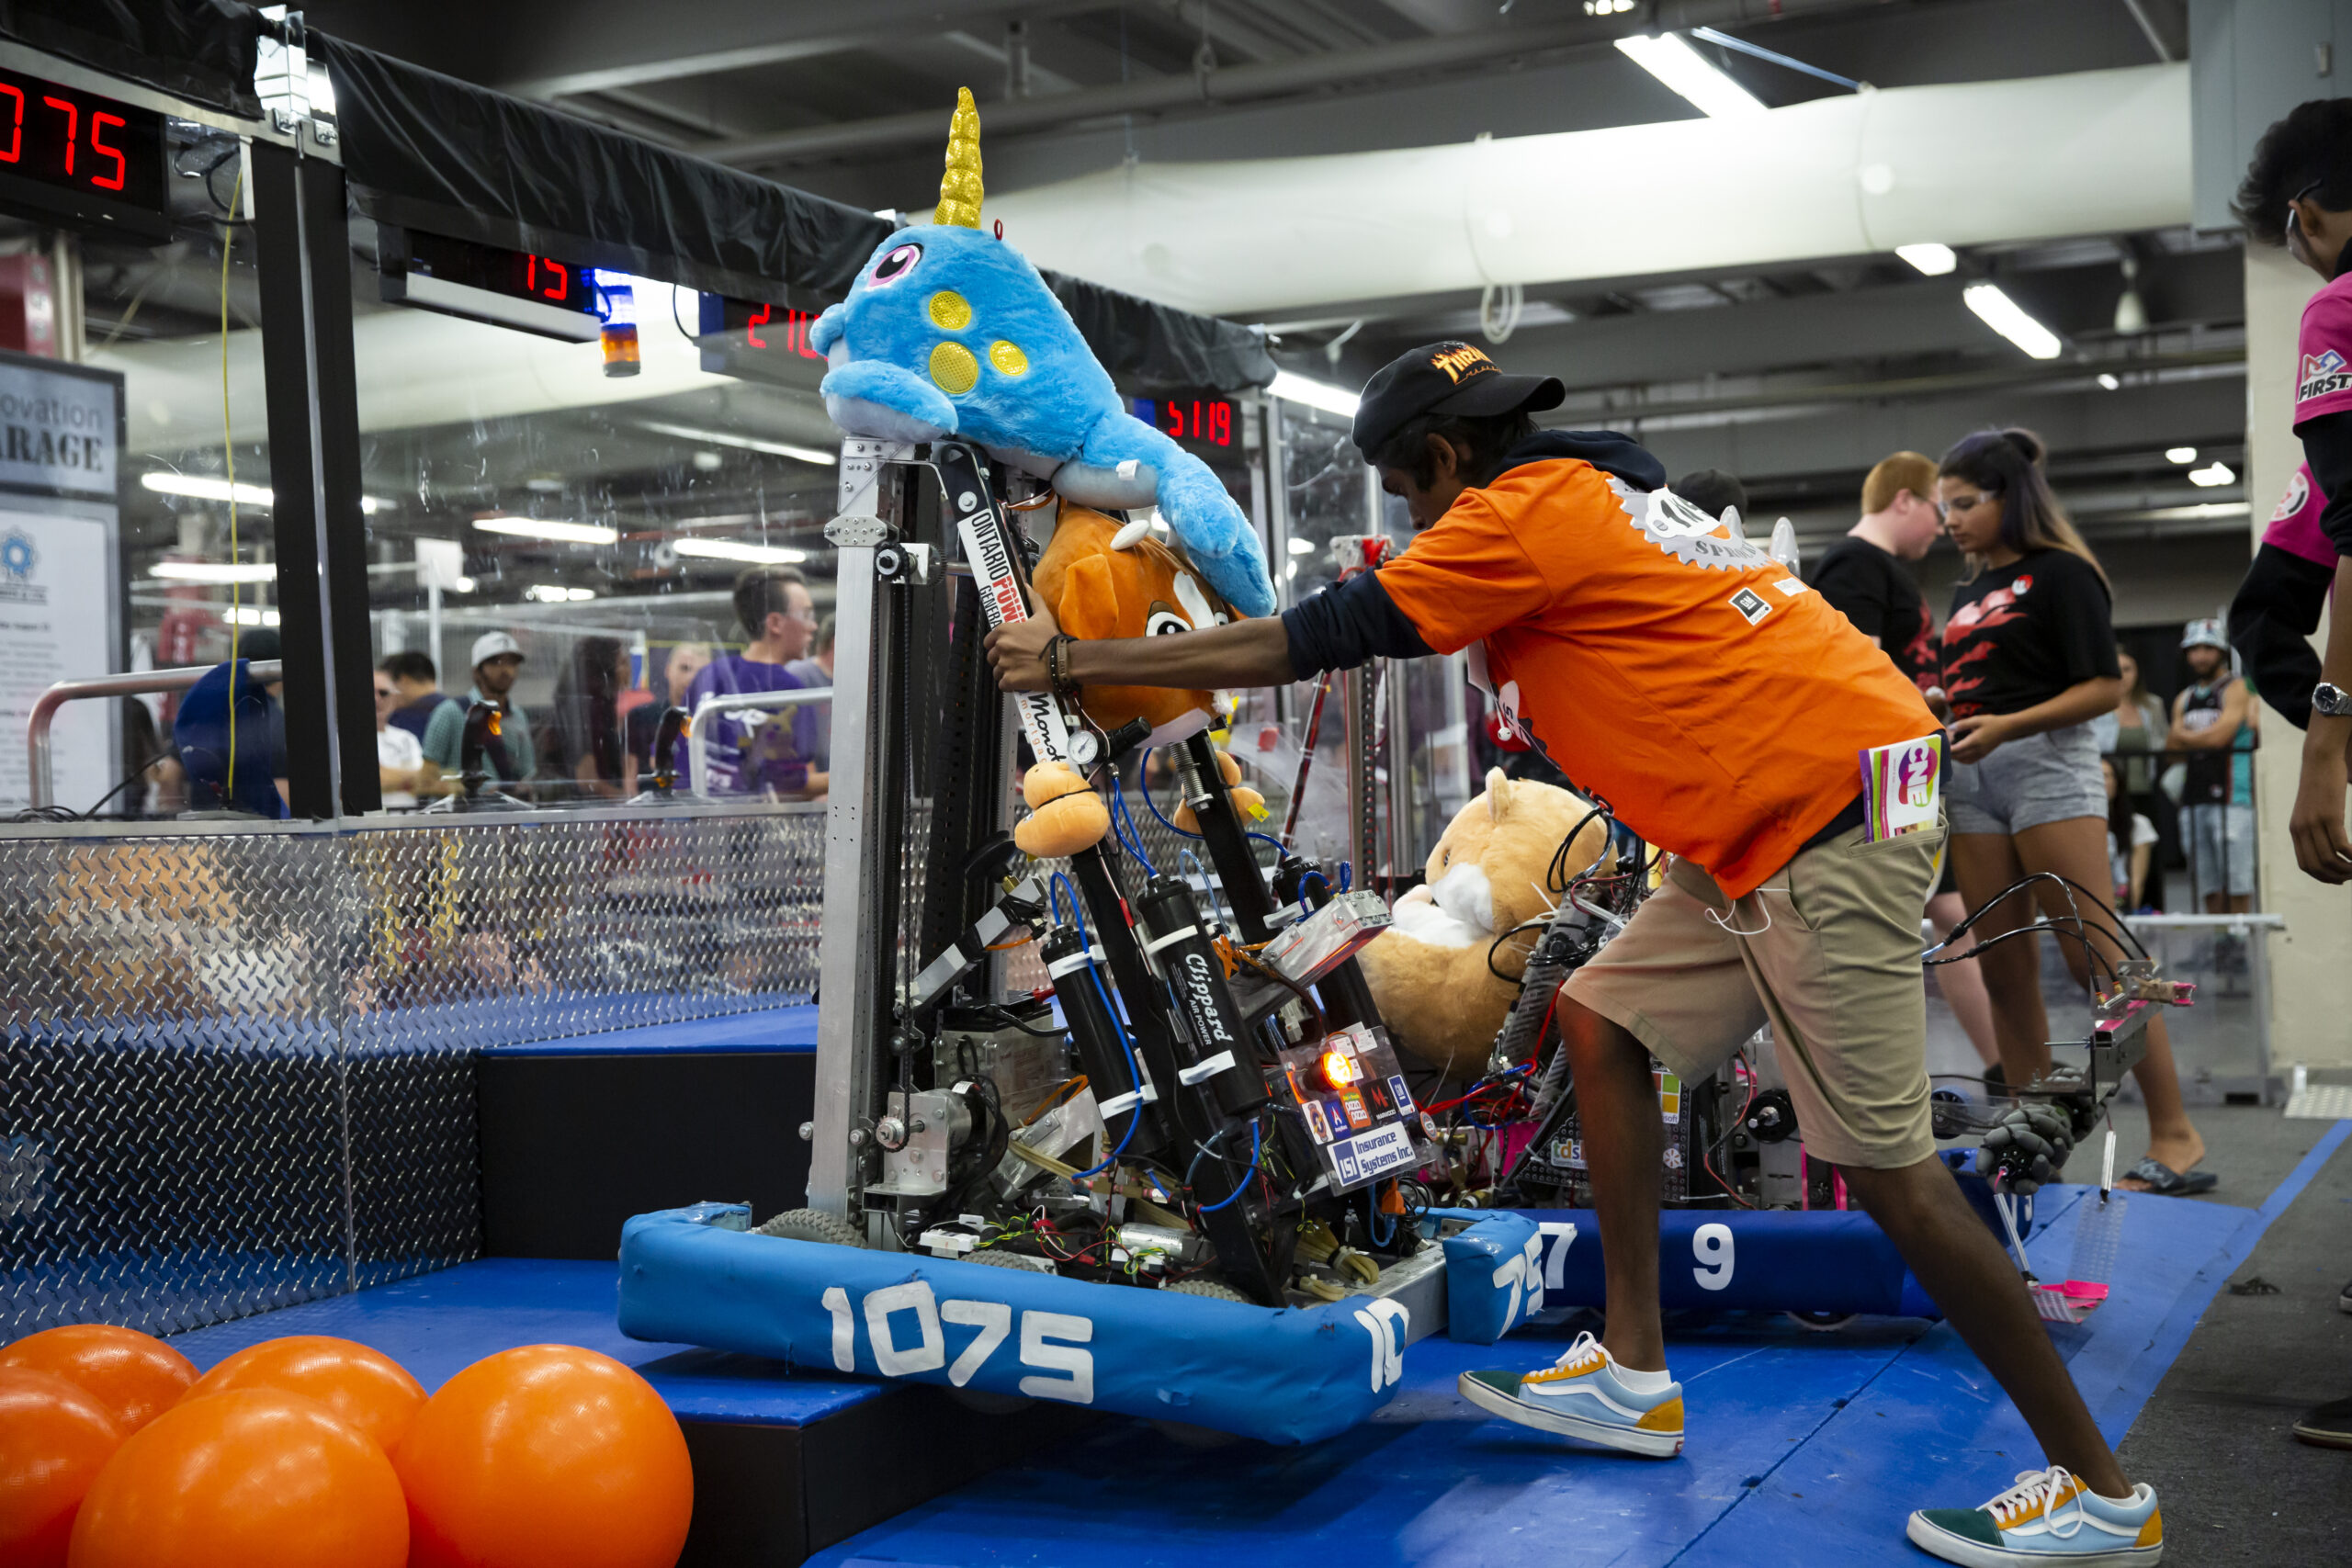 A big kid pushing a robot